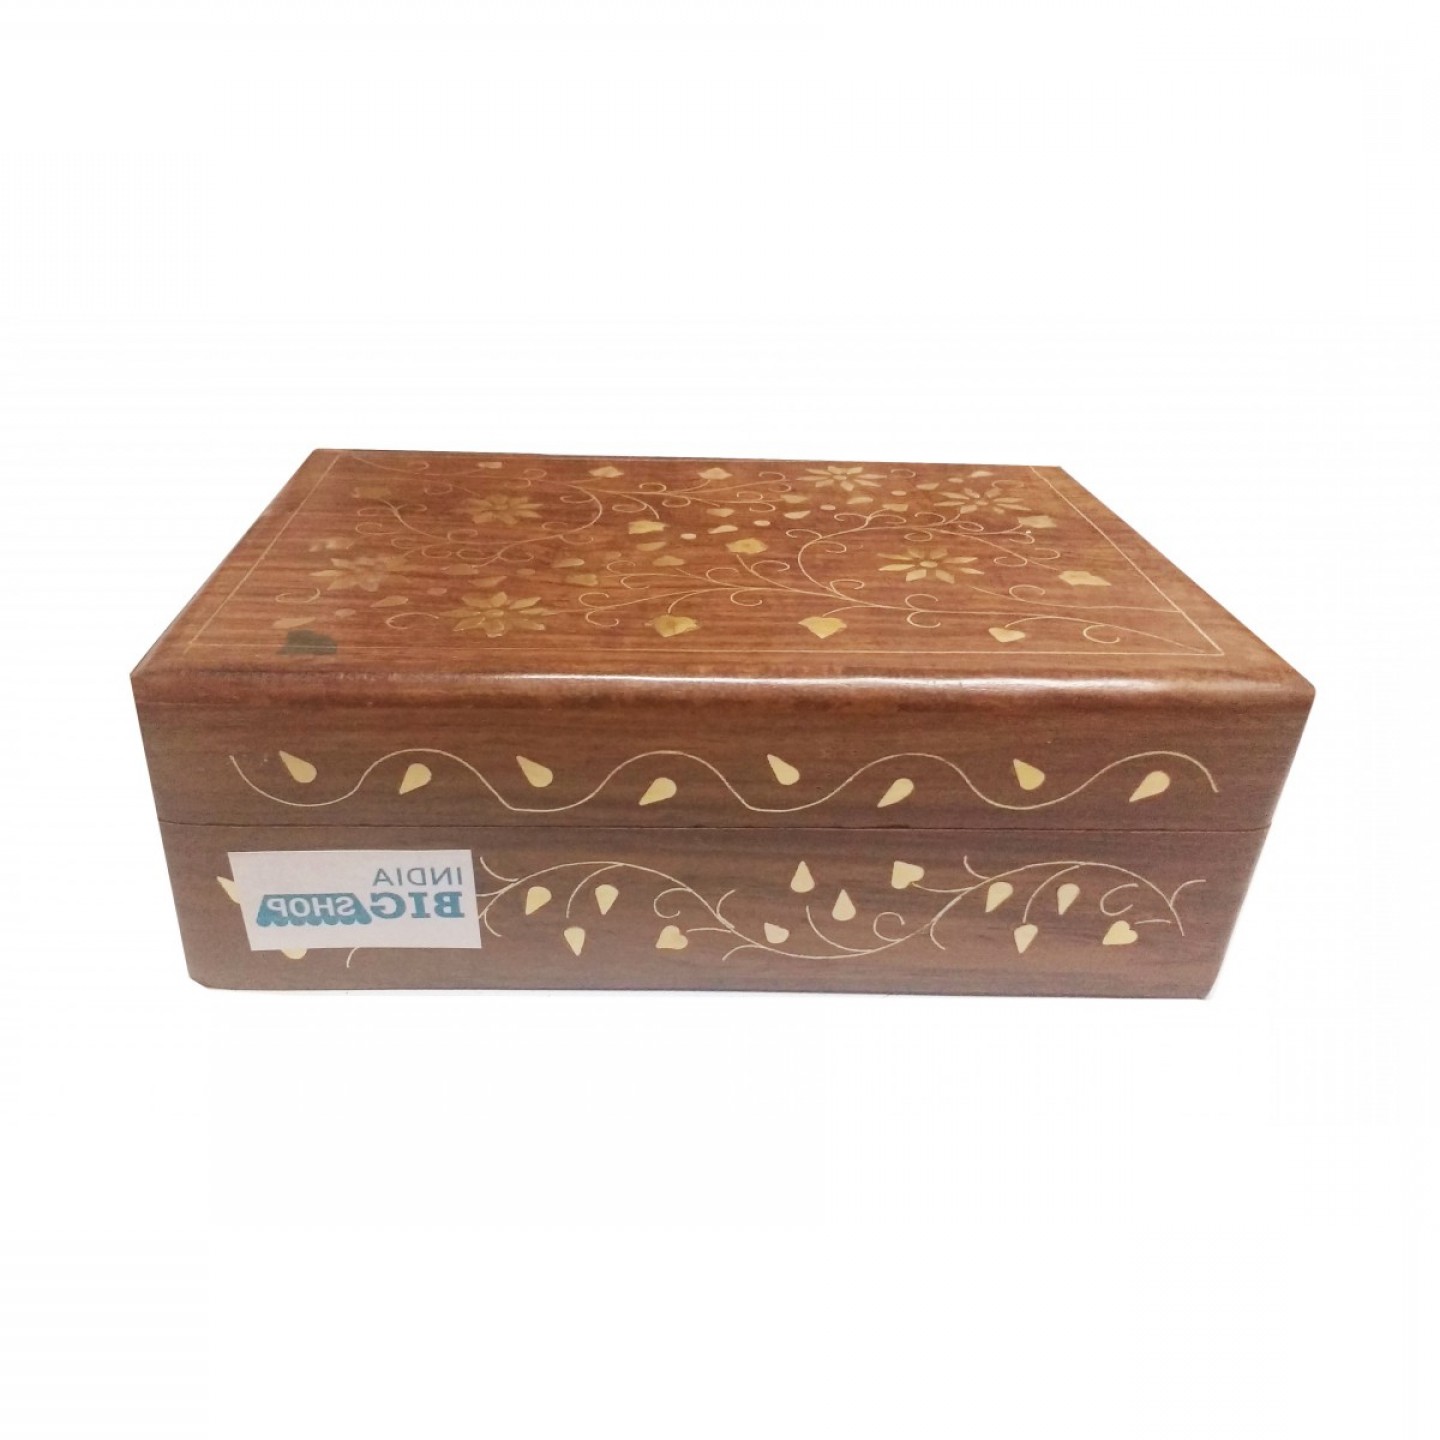 Sketchy Wooden Jewelry Box Brass Inlay Flower Design X Inch Vintage ...